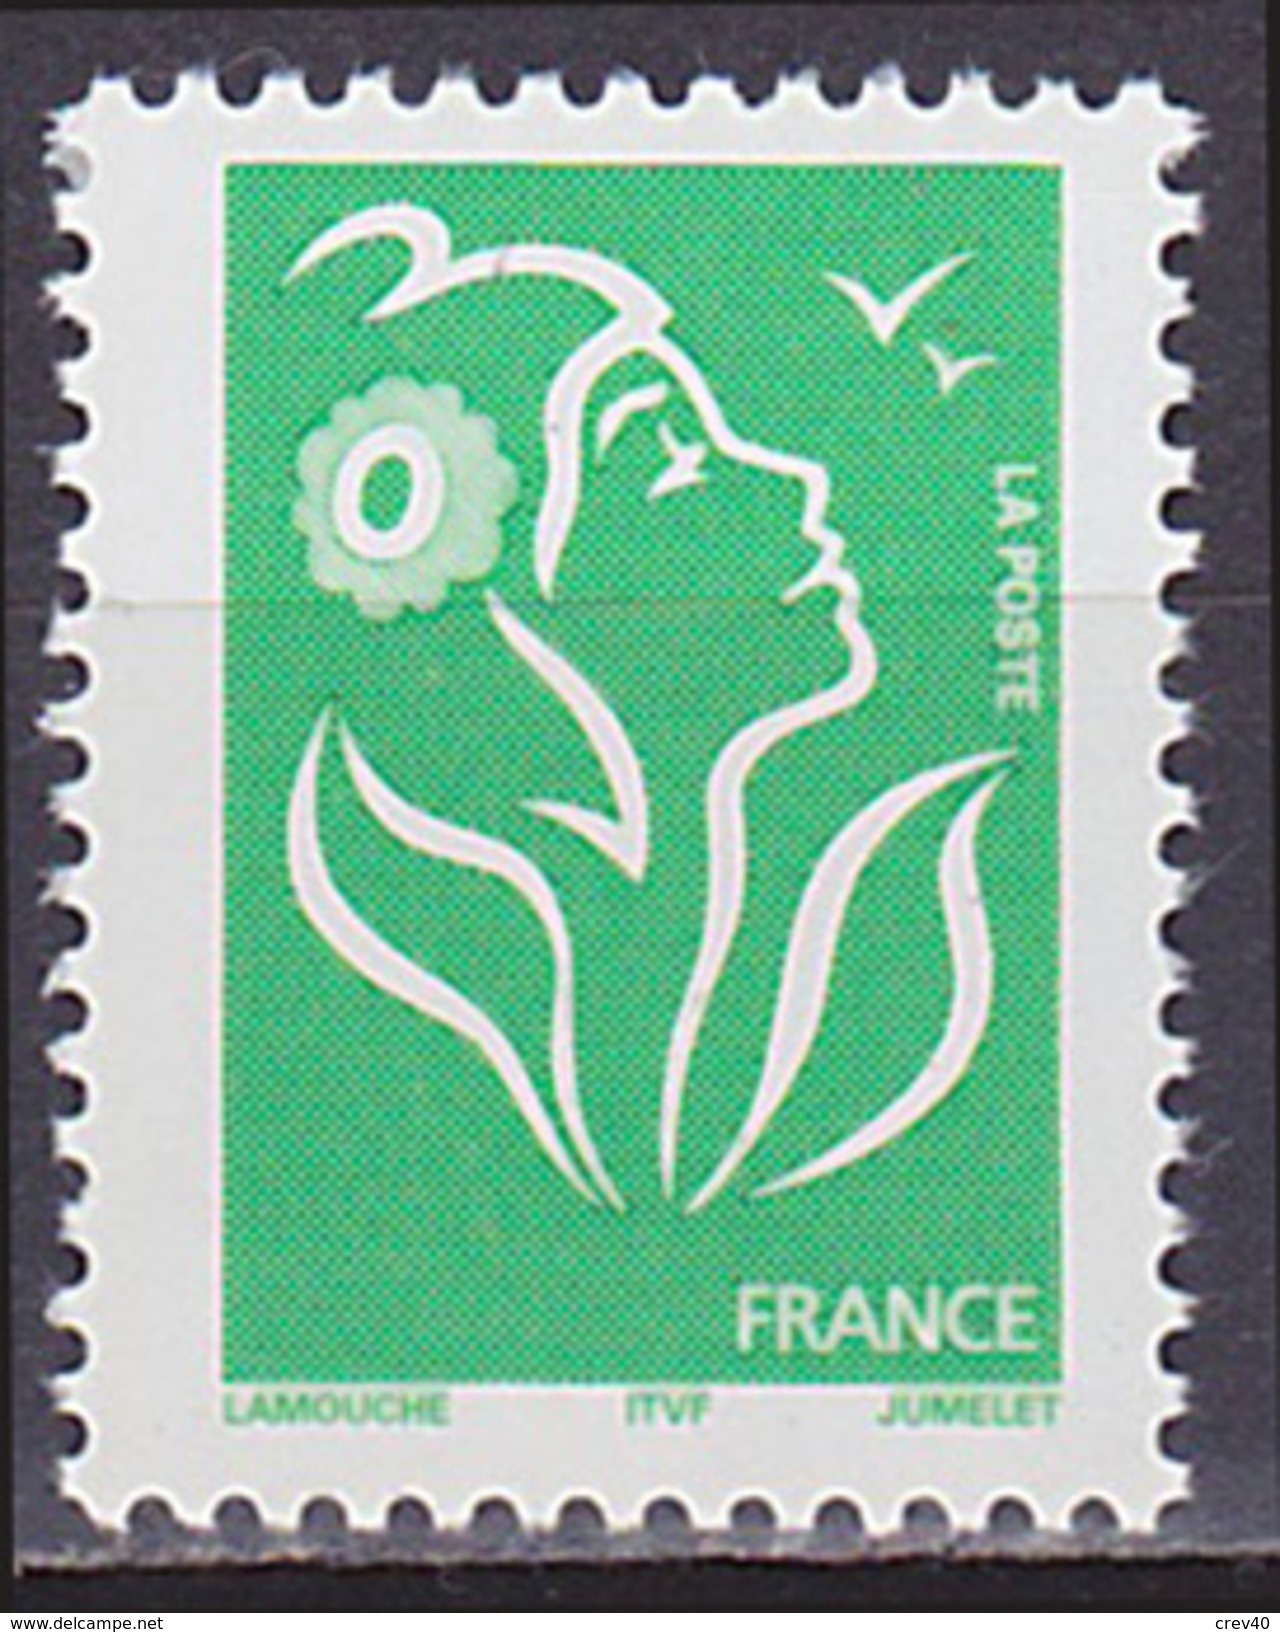 Timbre Neuf ** N° 3733a(Yvert) France 2005 - Marianne De Lamouche ITVF - 2004-2008 Marianne De Lamouche